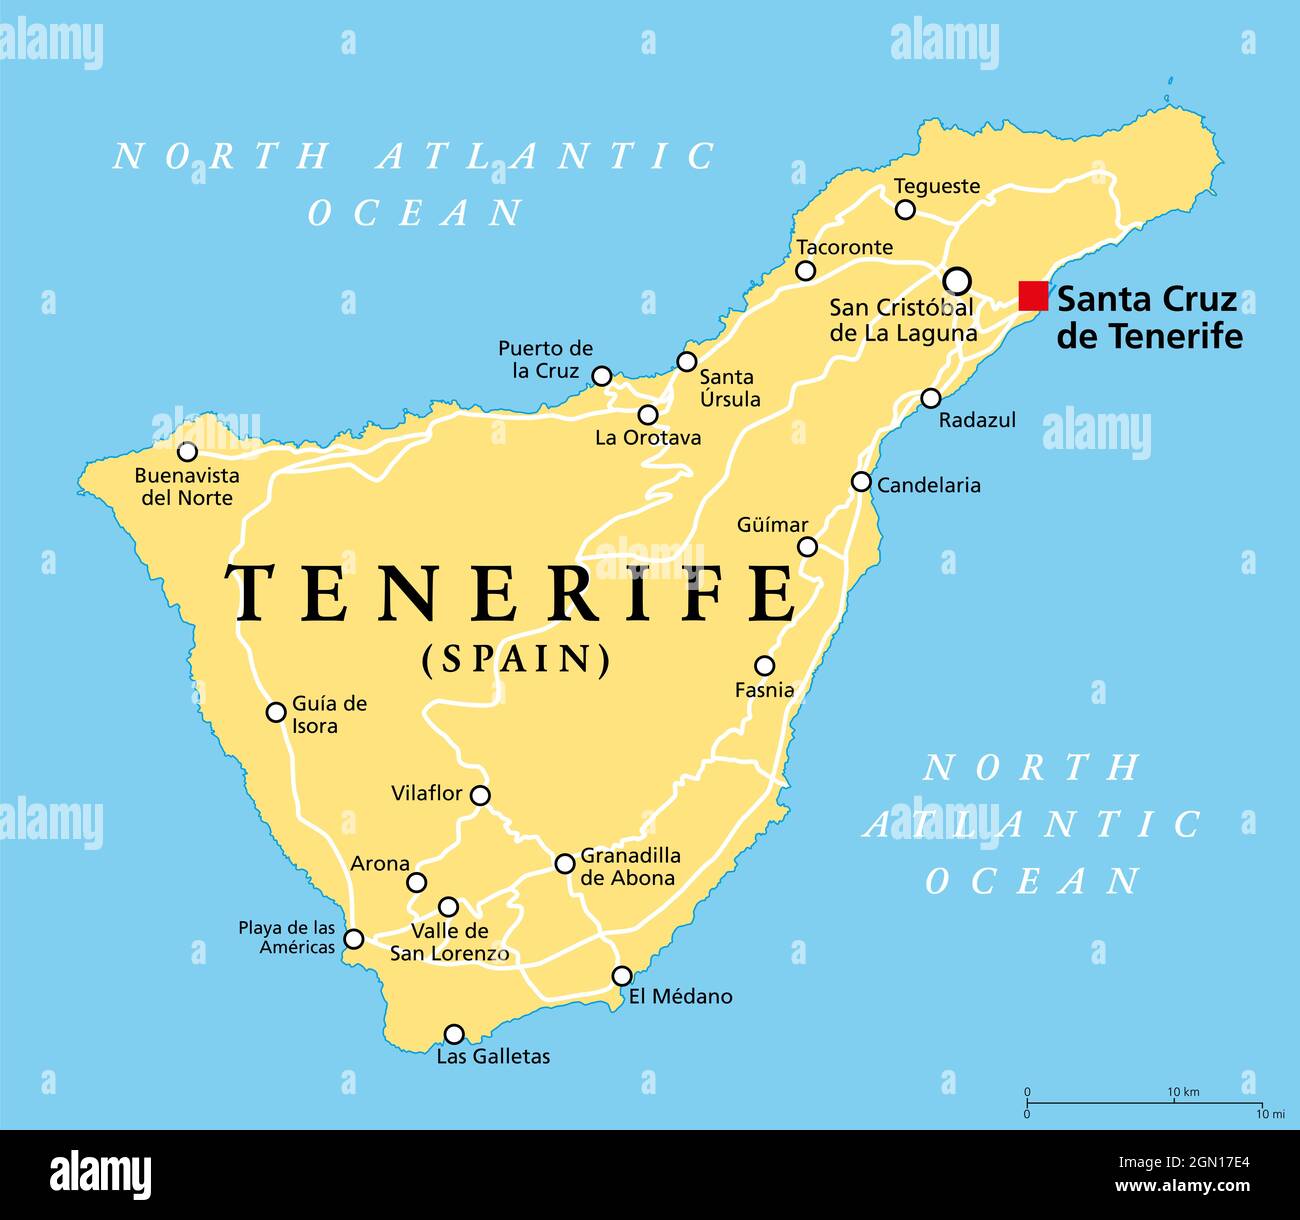 Tenerife island, political map, with capital Santa Cruz de Tenerife. Largest and most populous island of Canary Islands, Spain. Stock Photo